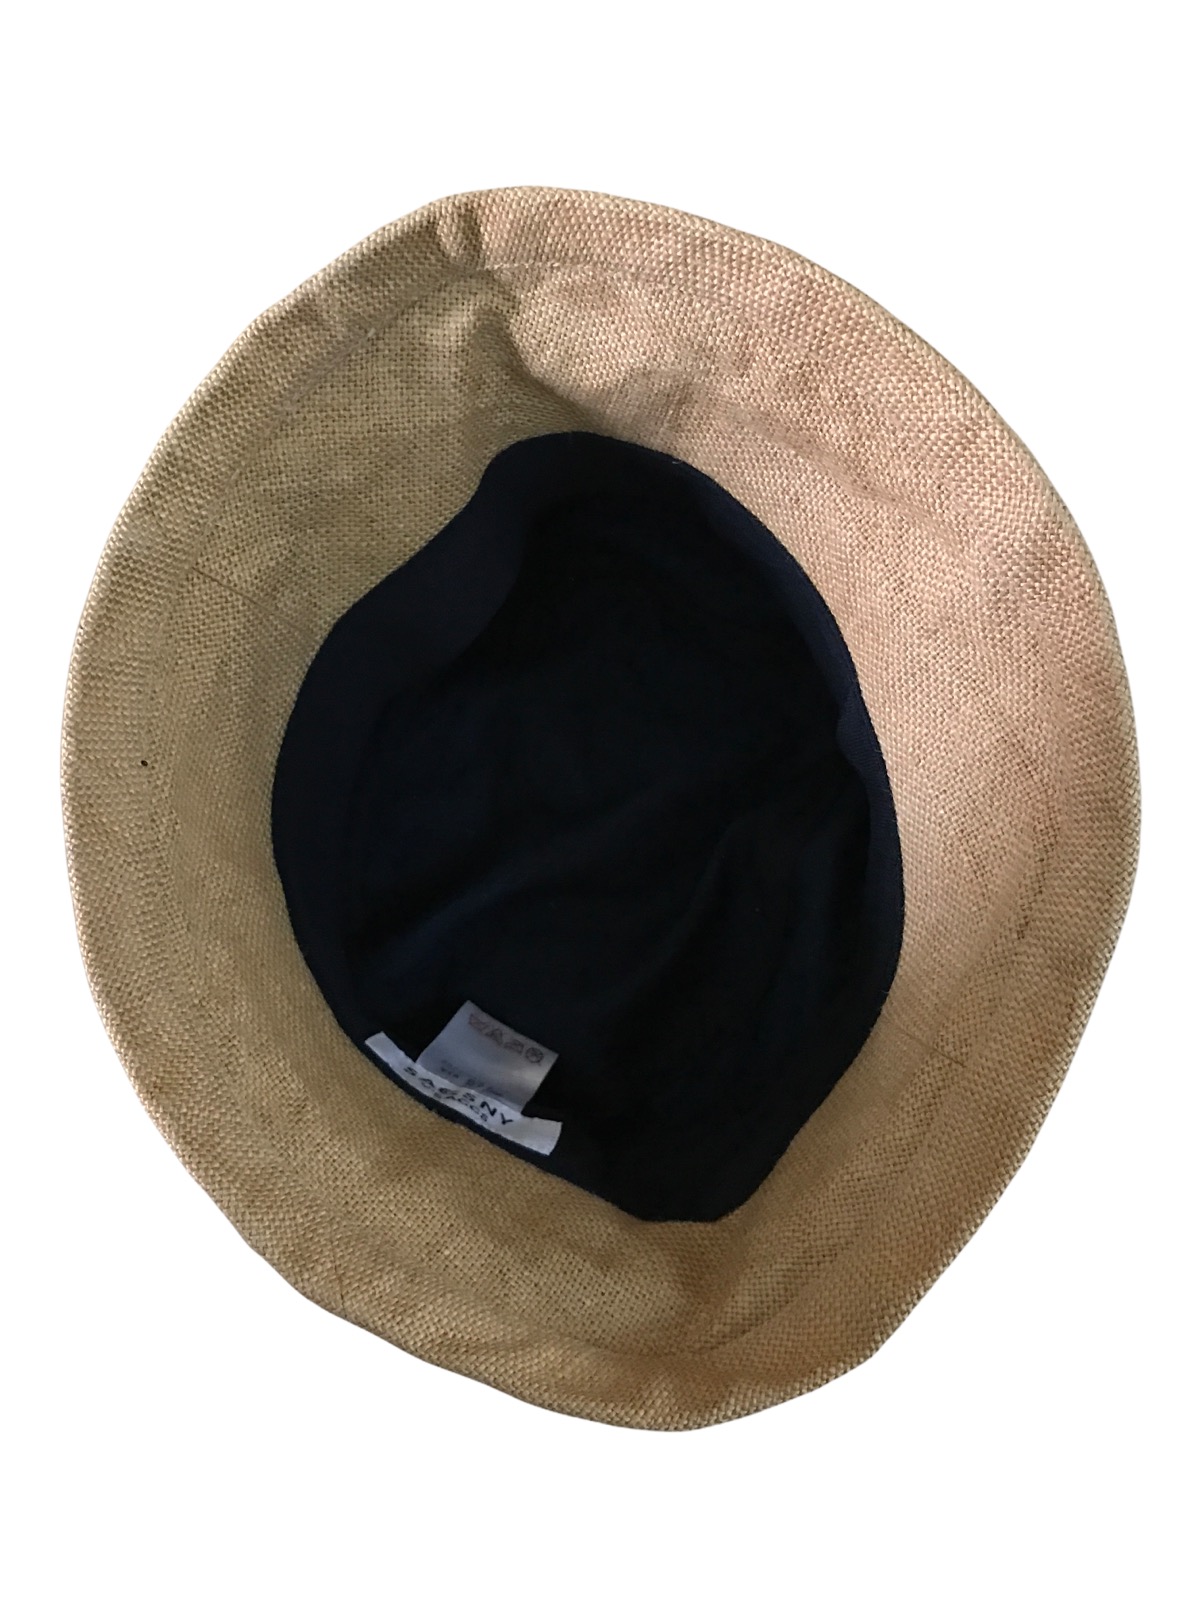 Yohji Yamamoto Y’saccs Denim Bucket Hat